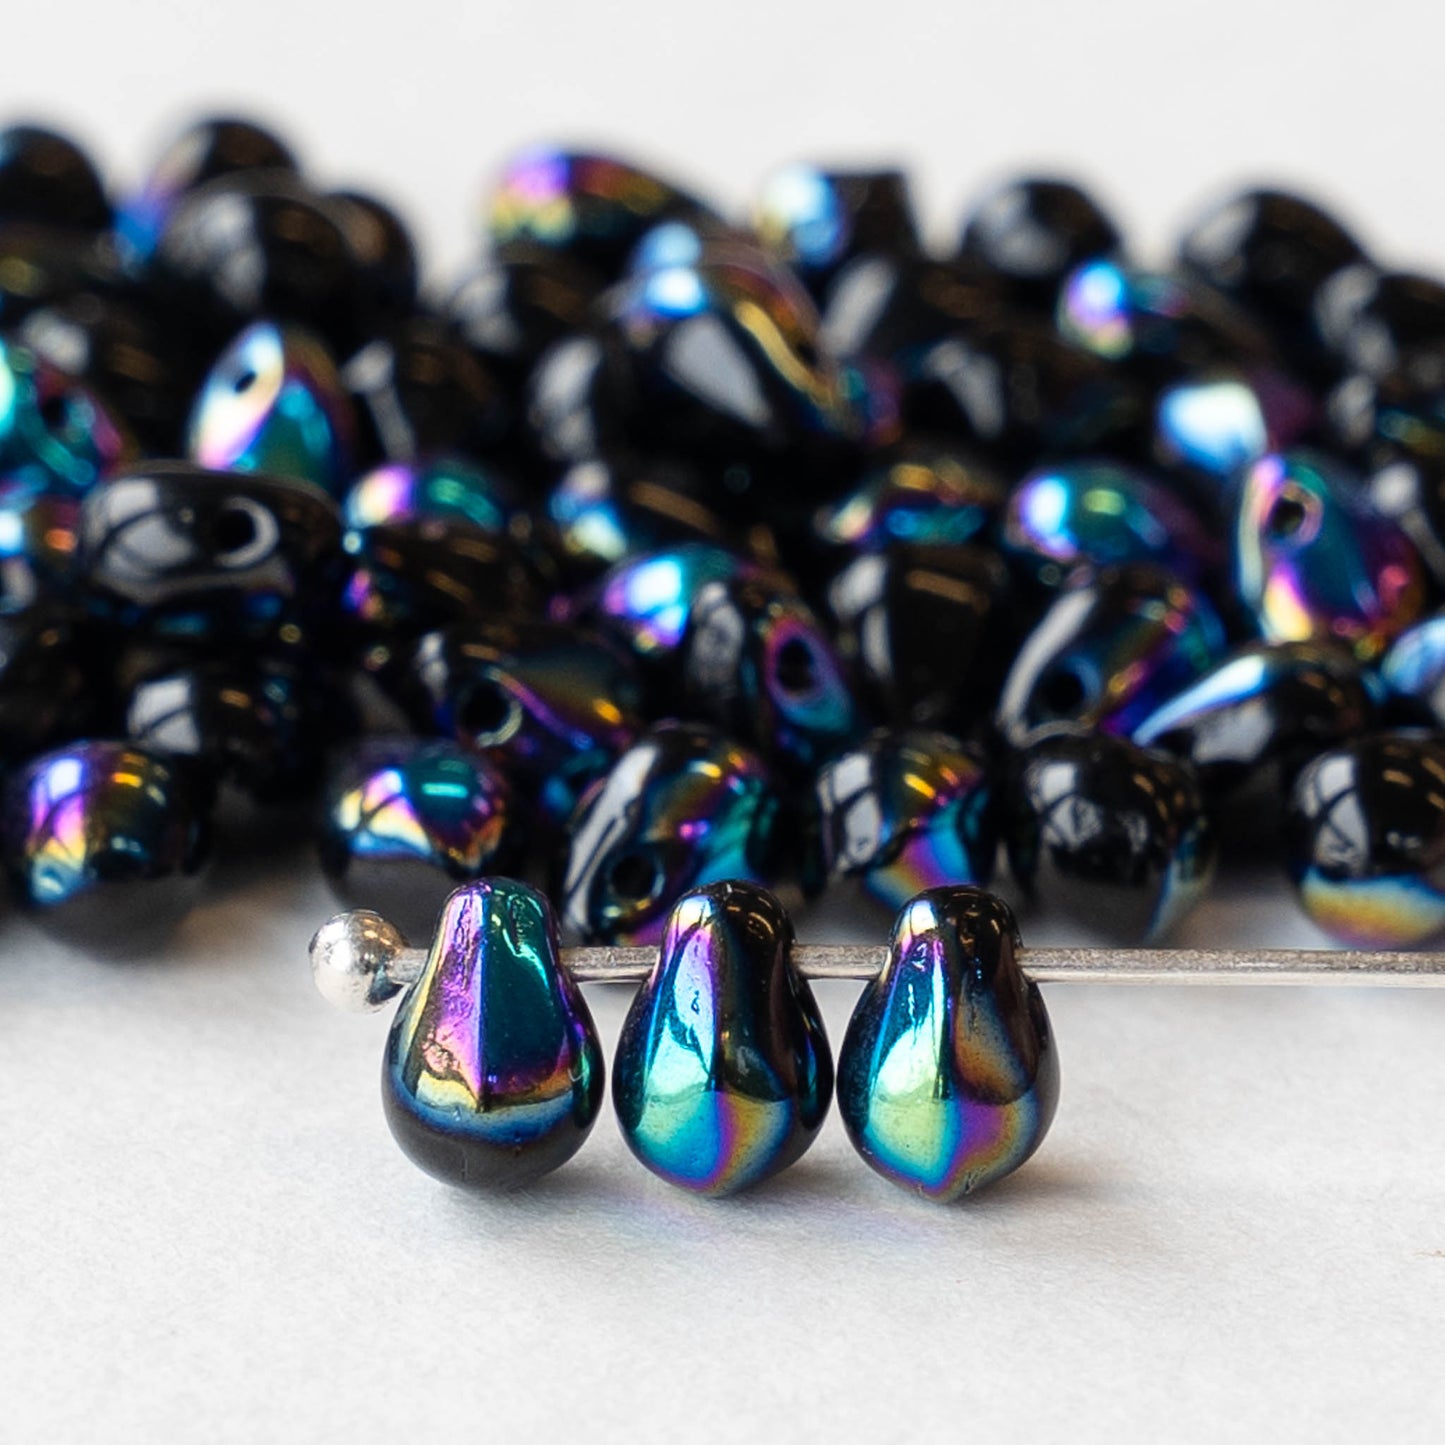 4x6mm Glass Teardrop Beads - Jet Black AB - 100 Beads